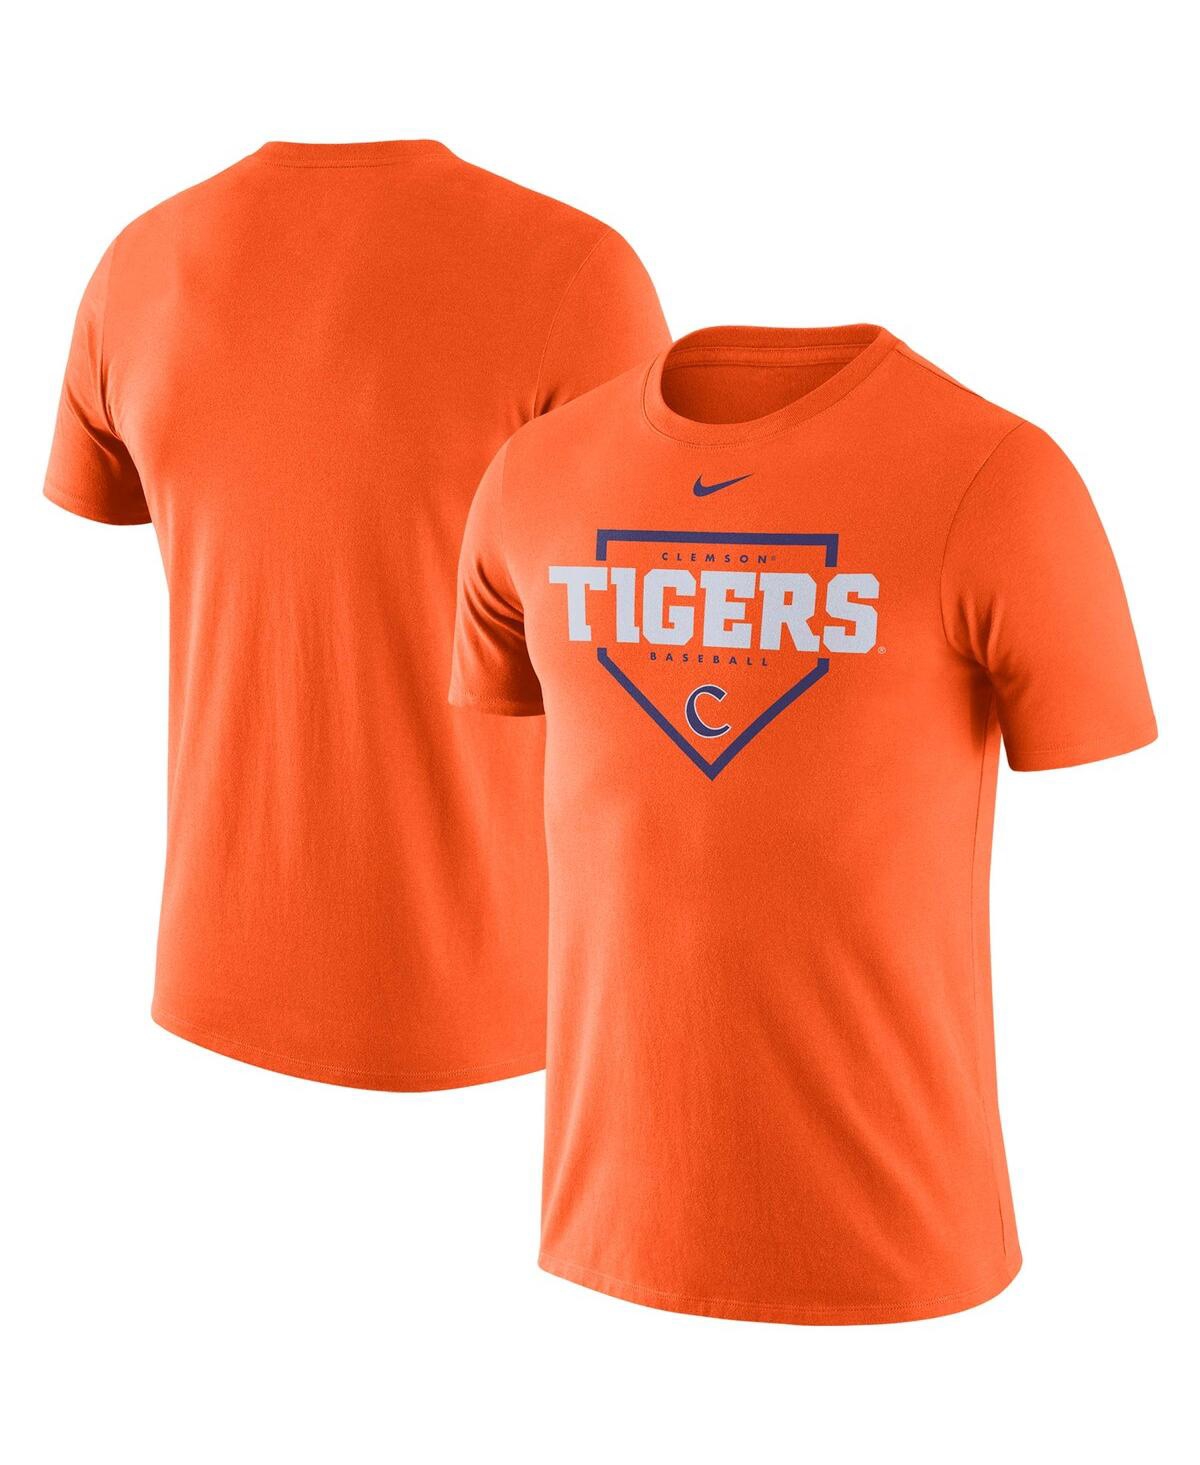 Men's Nike Orange Clemson Tigers Baseball Plate Performance T-shirt